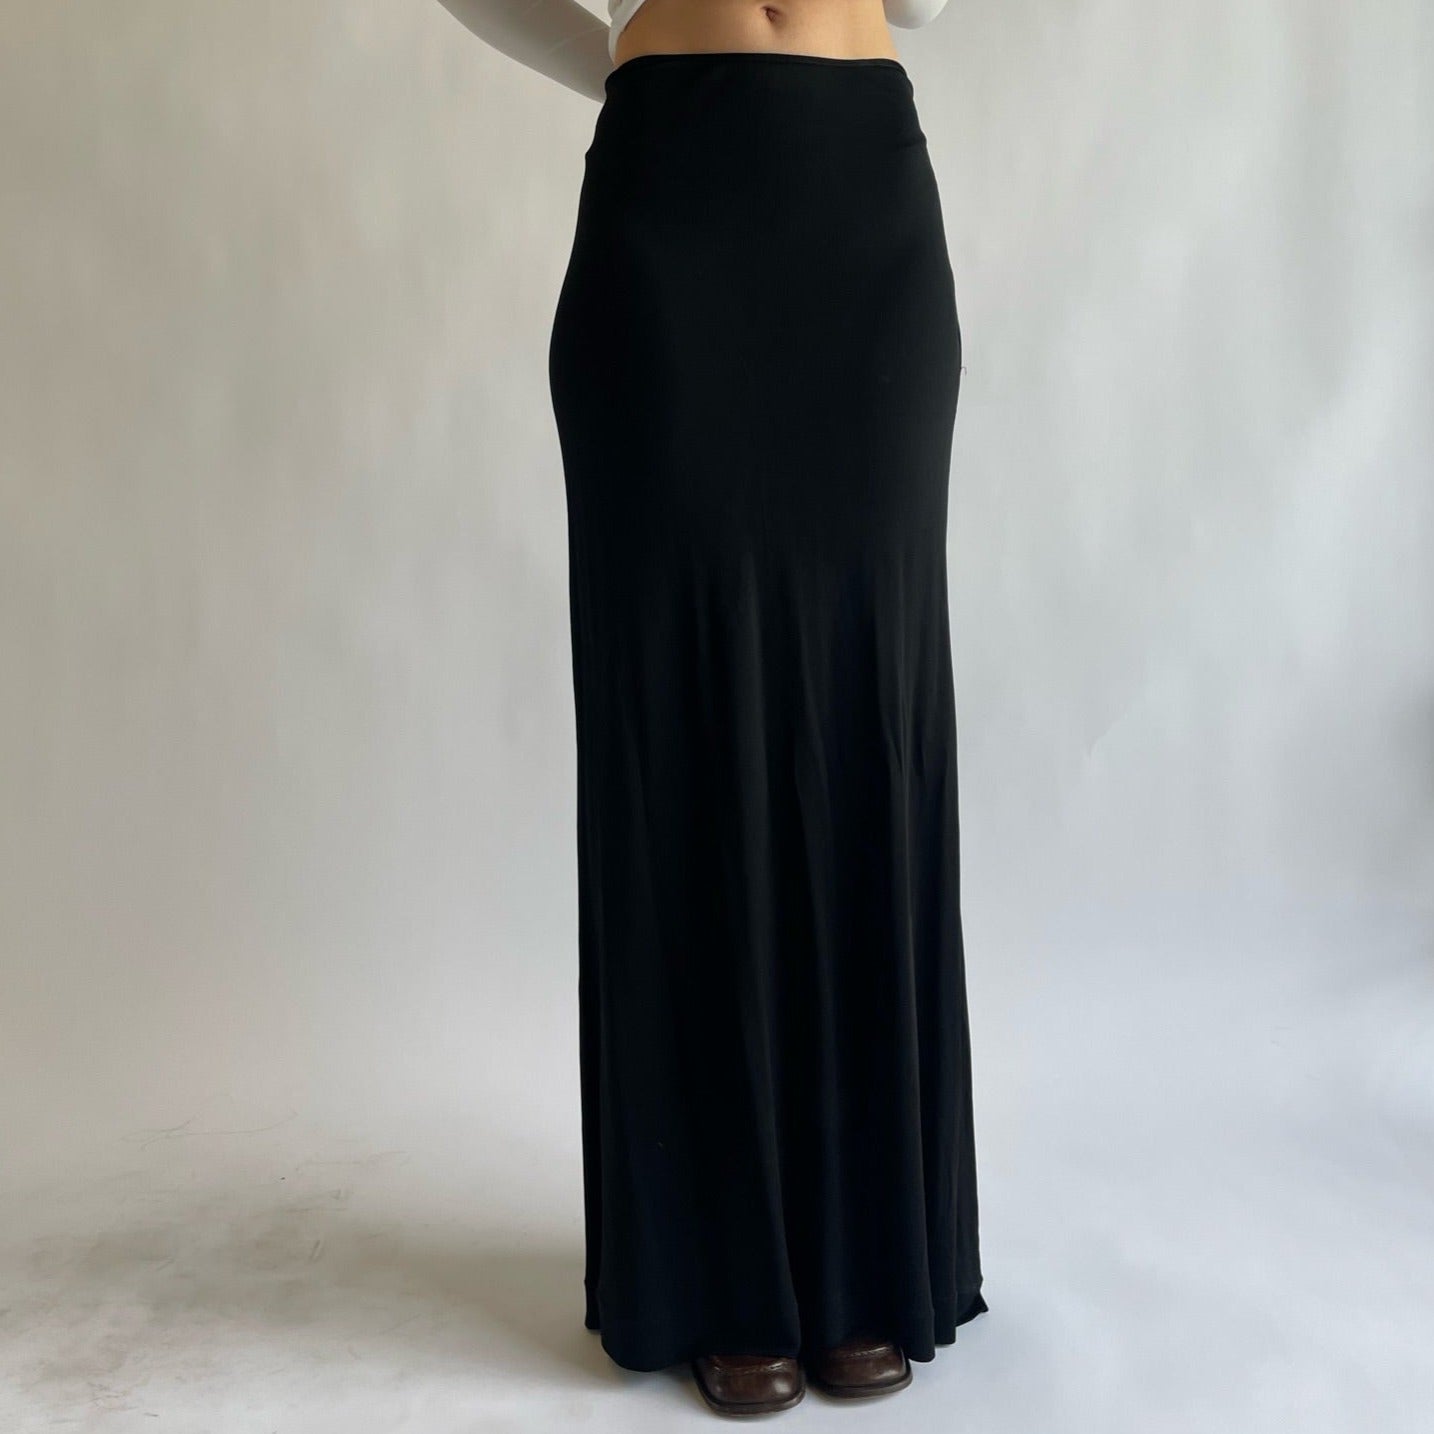 jean paul gaultier black skirt